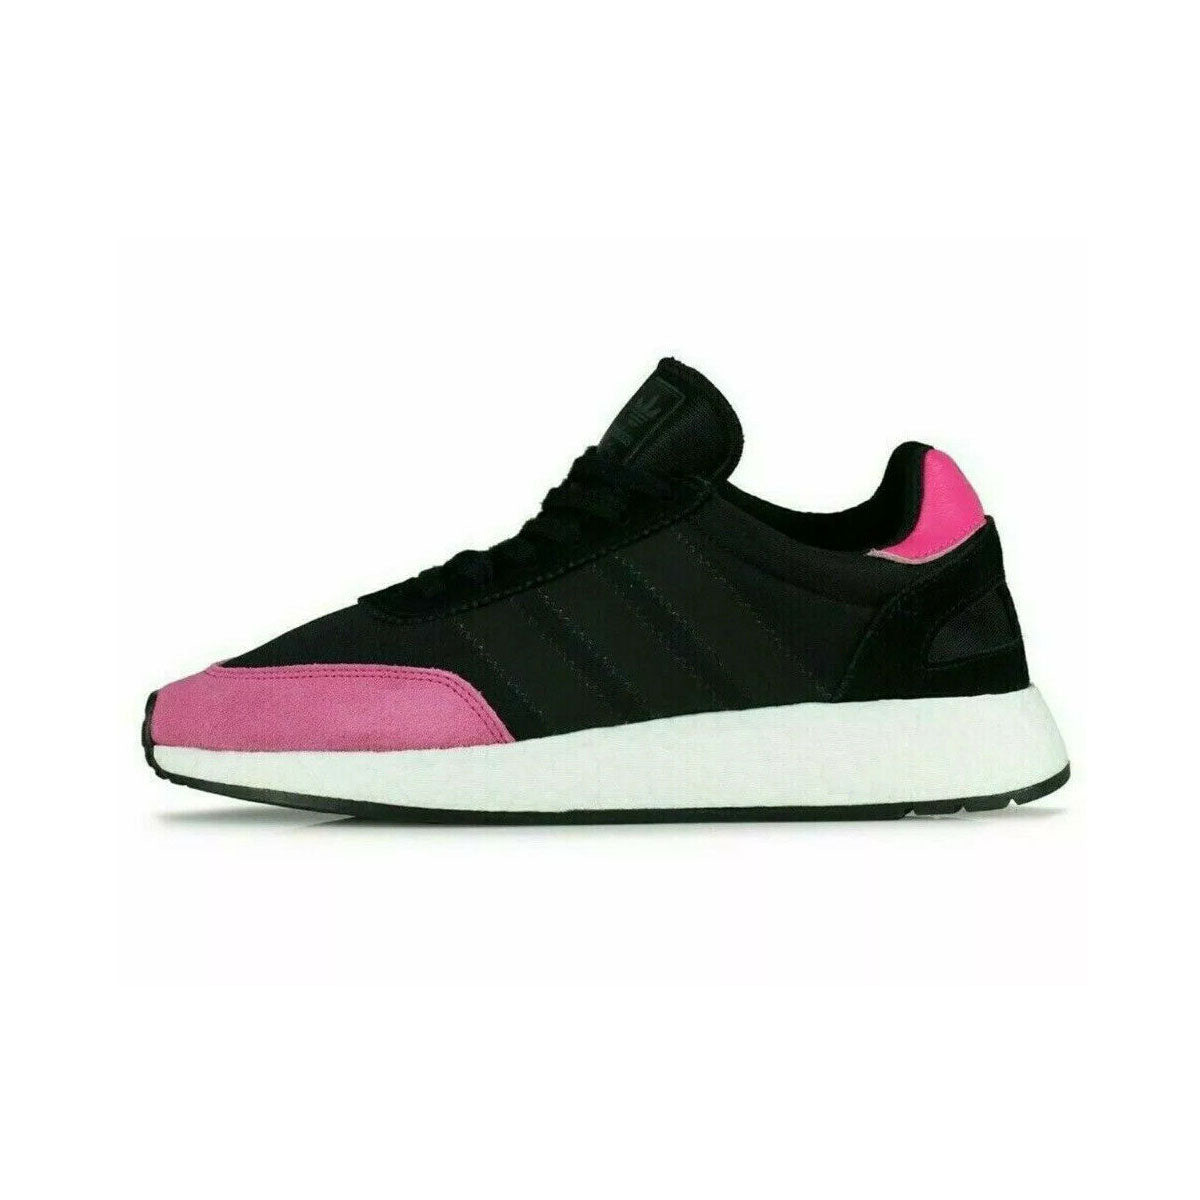 Adidas Men's I-5923 Pink Toe